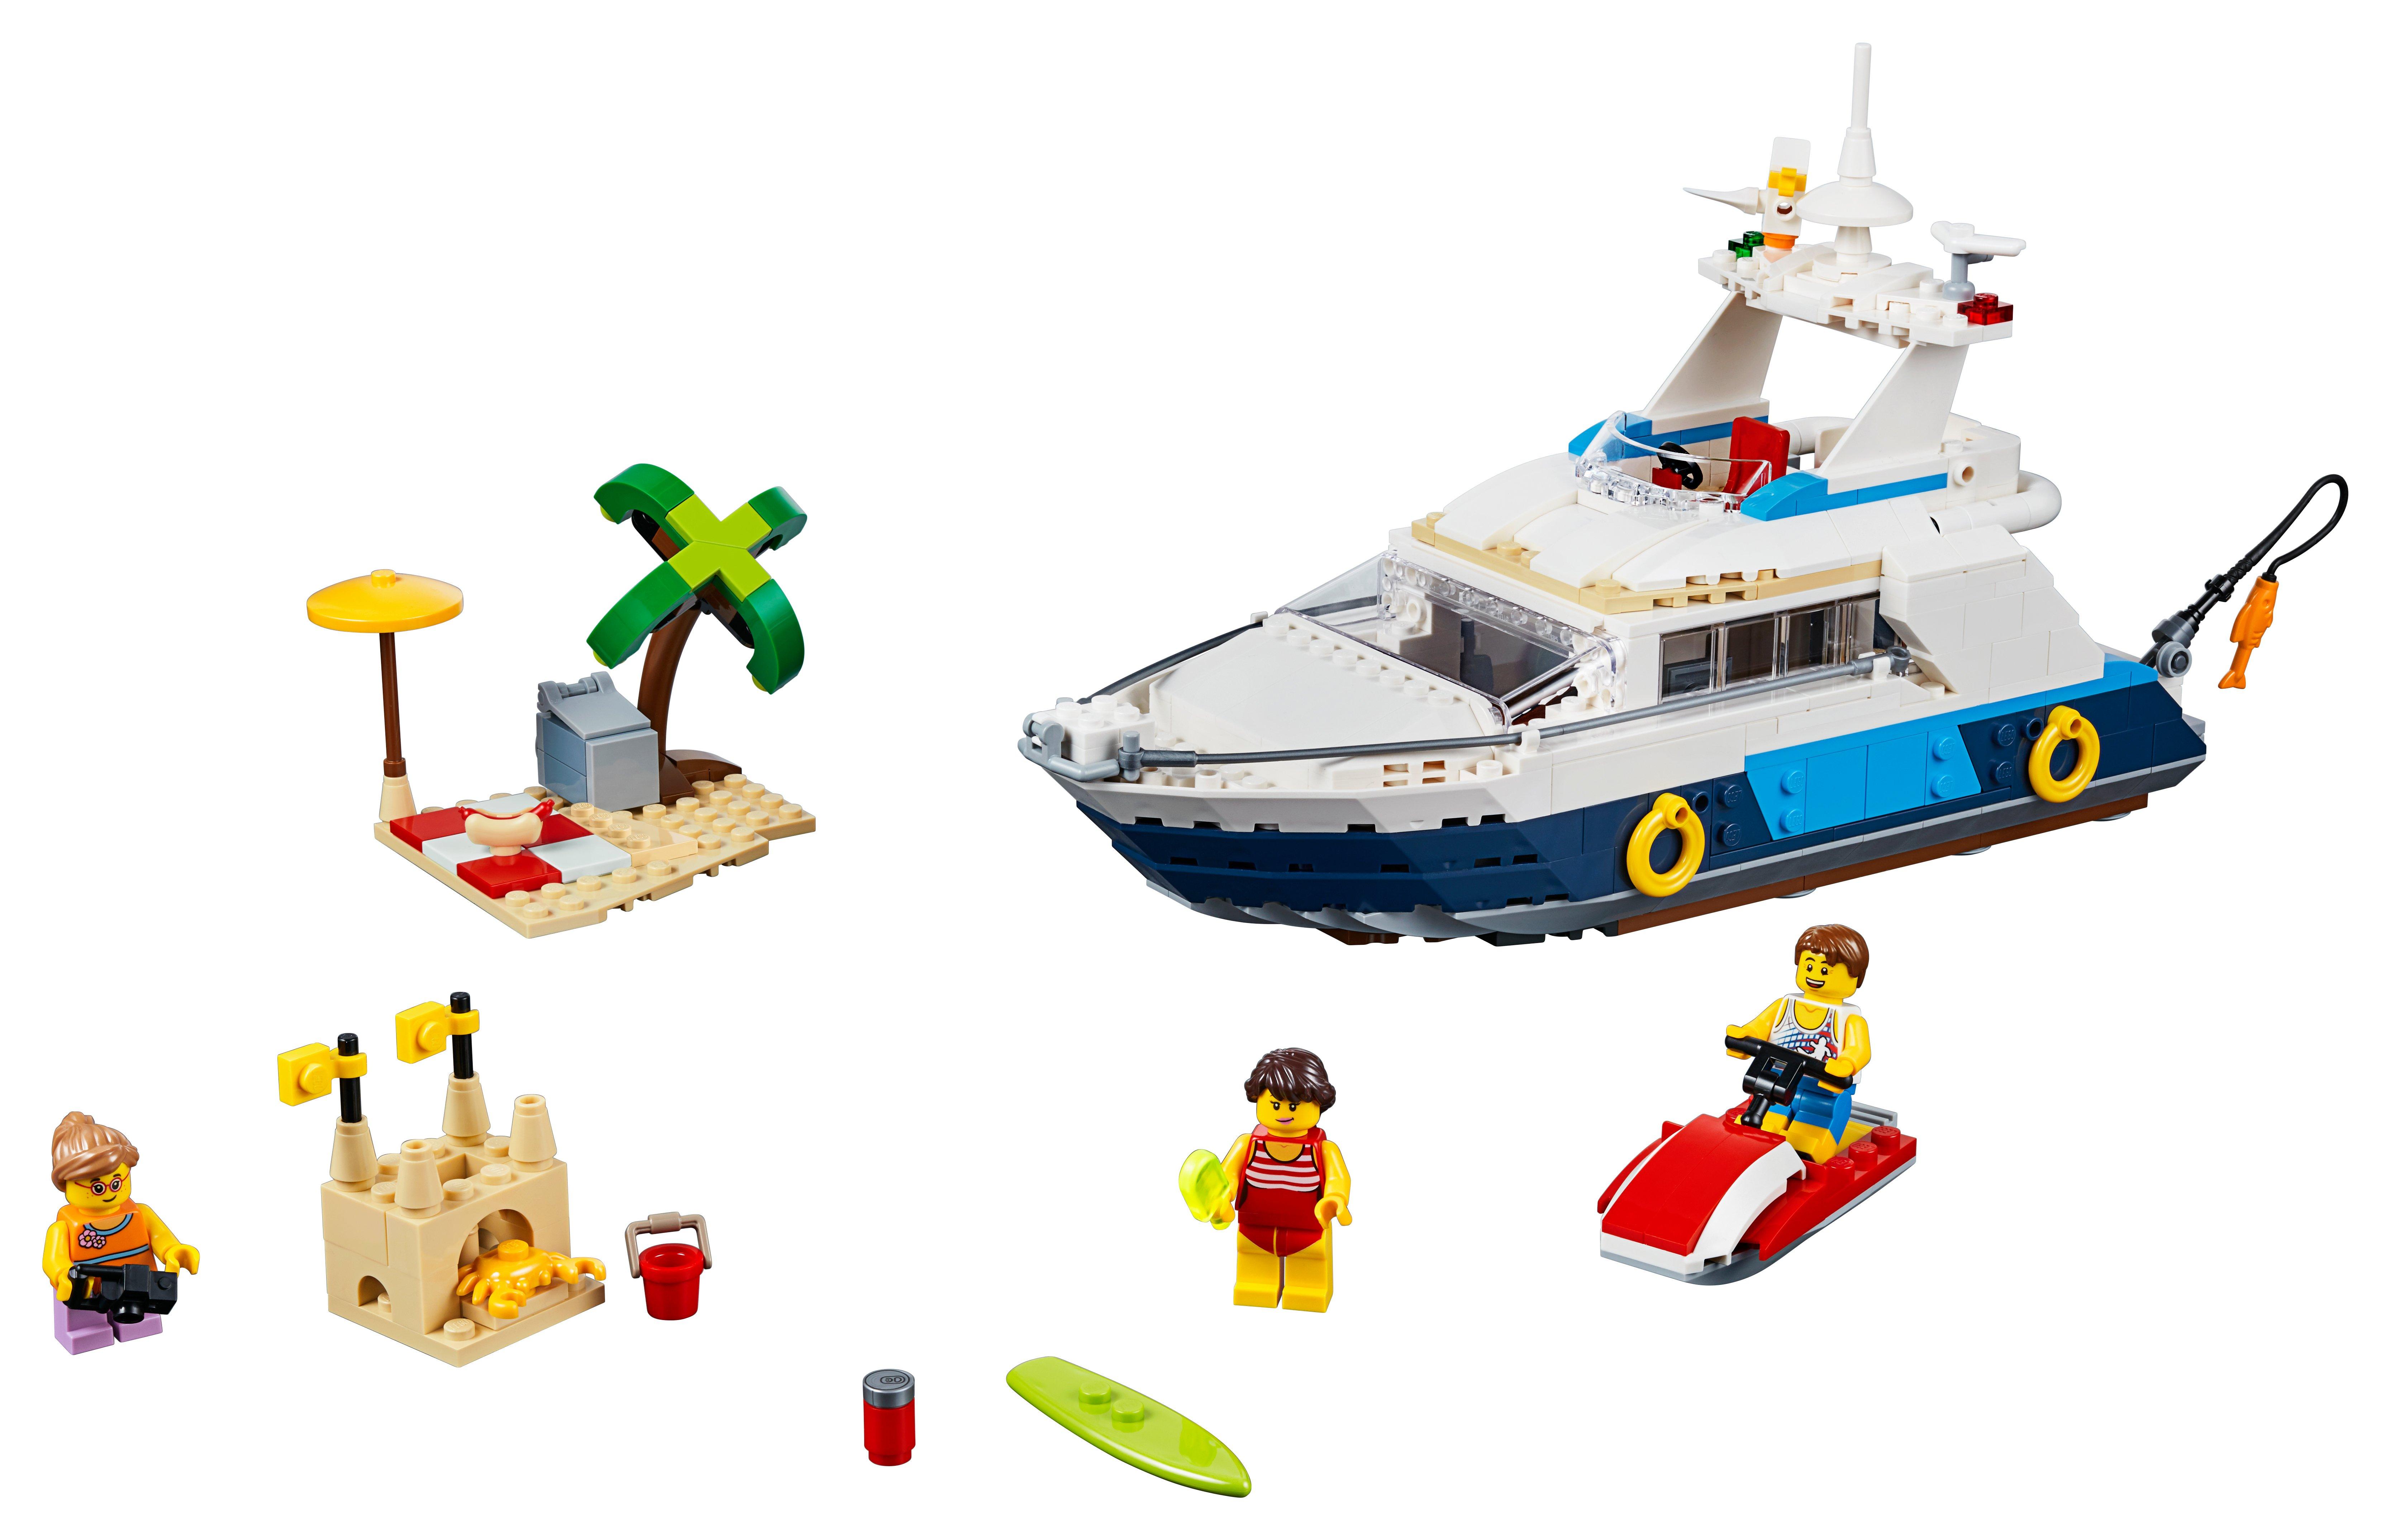 LEGO®  31083 Avventure in mare 